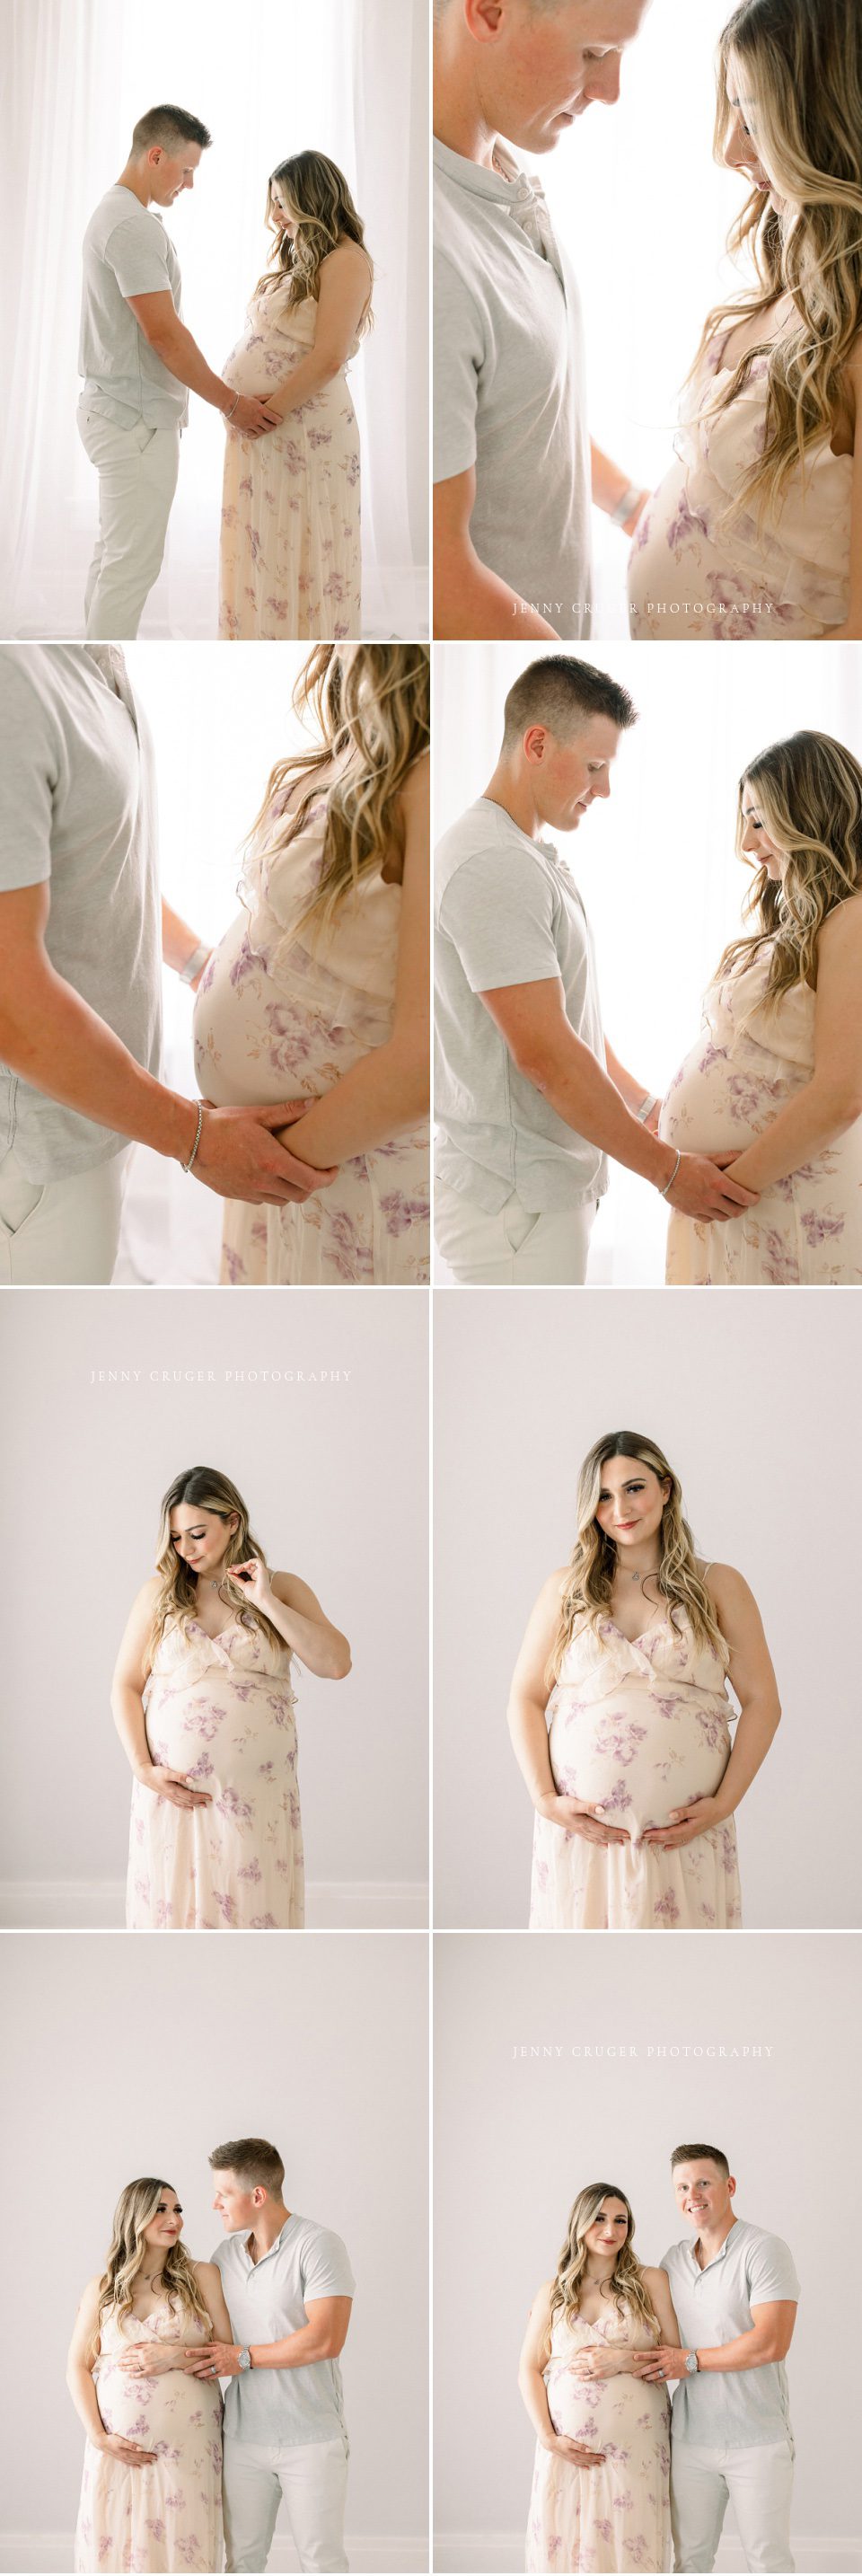 Franklin Maternity Photographer 